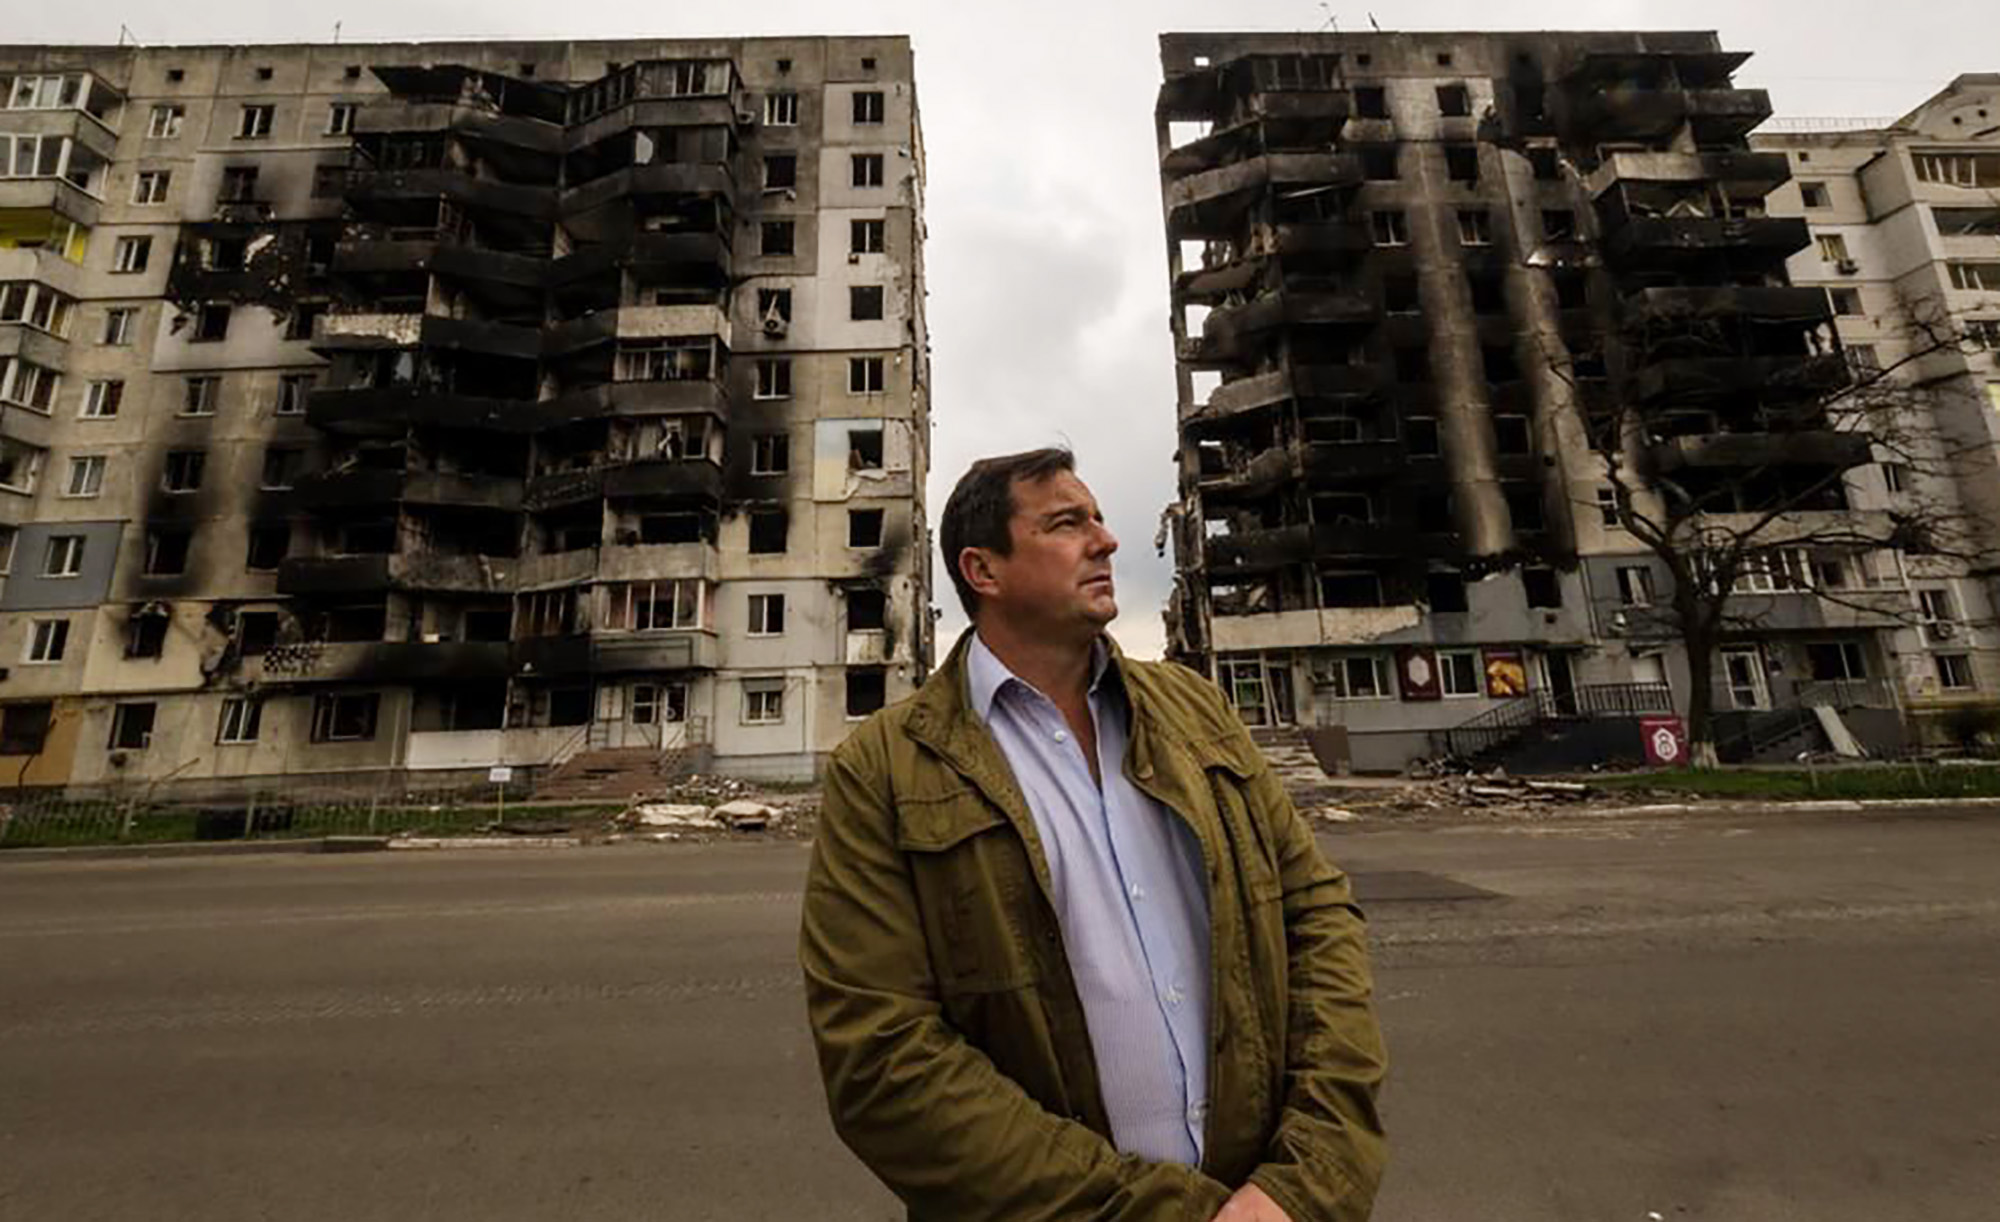 John Steenhuisen visiting a war-ravaged area of Ukraine